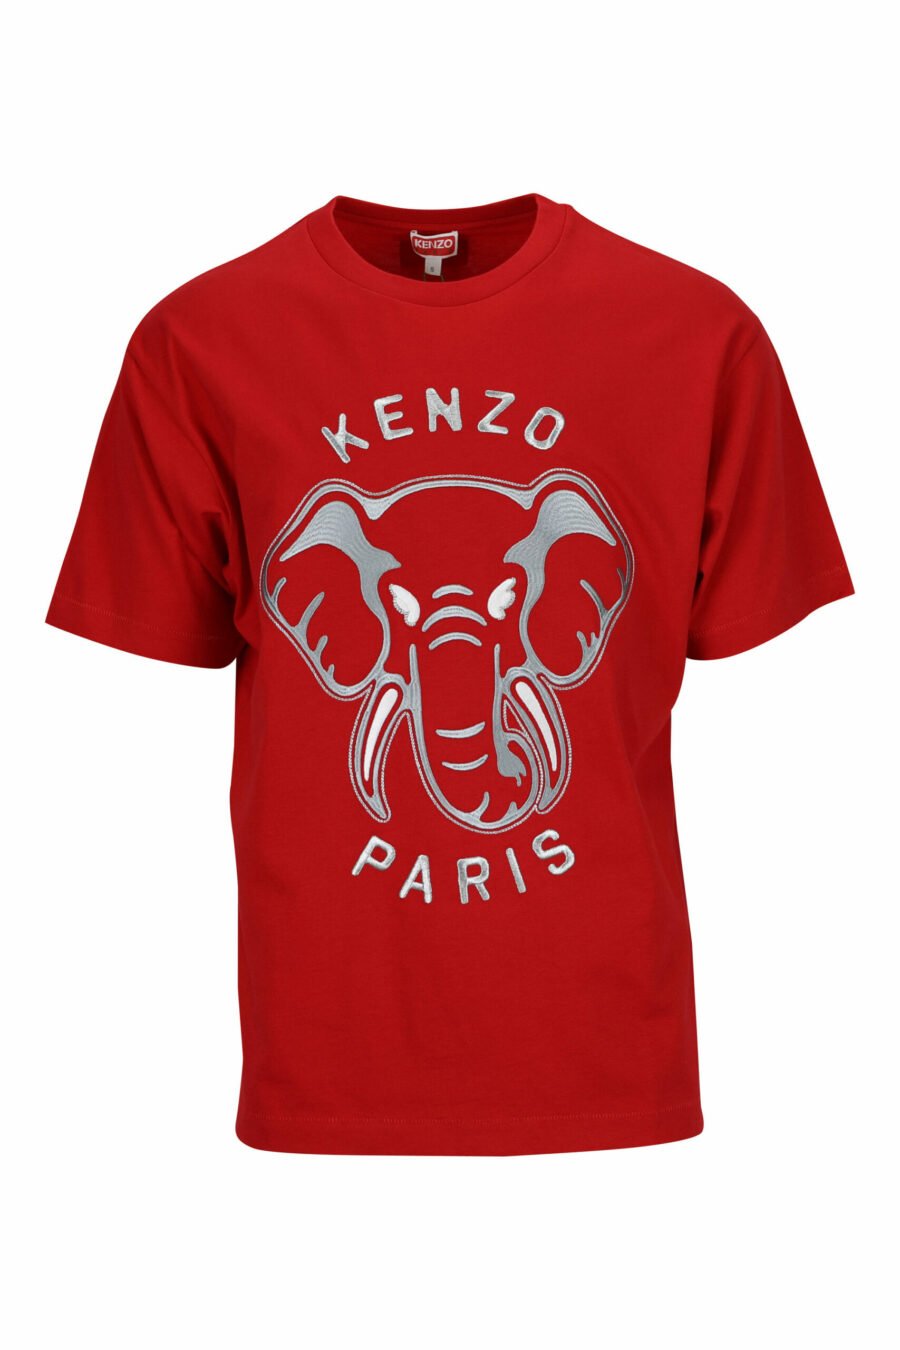 Camiseta roja "oversize" logo grande elefante relieve - 3612230568877 scaled